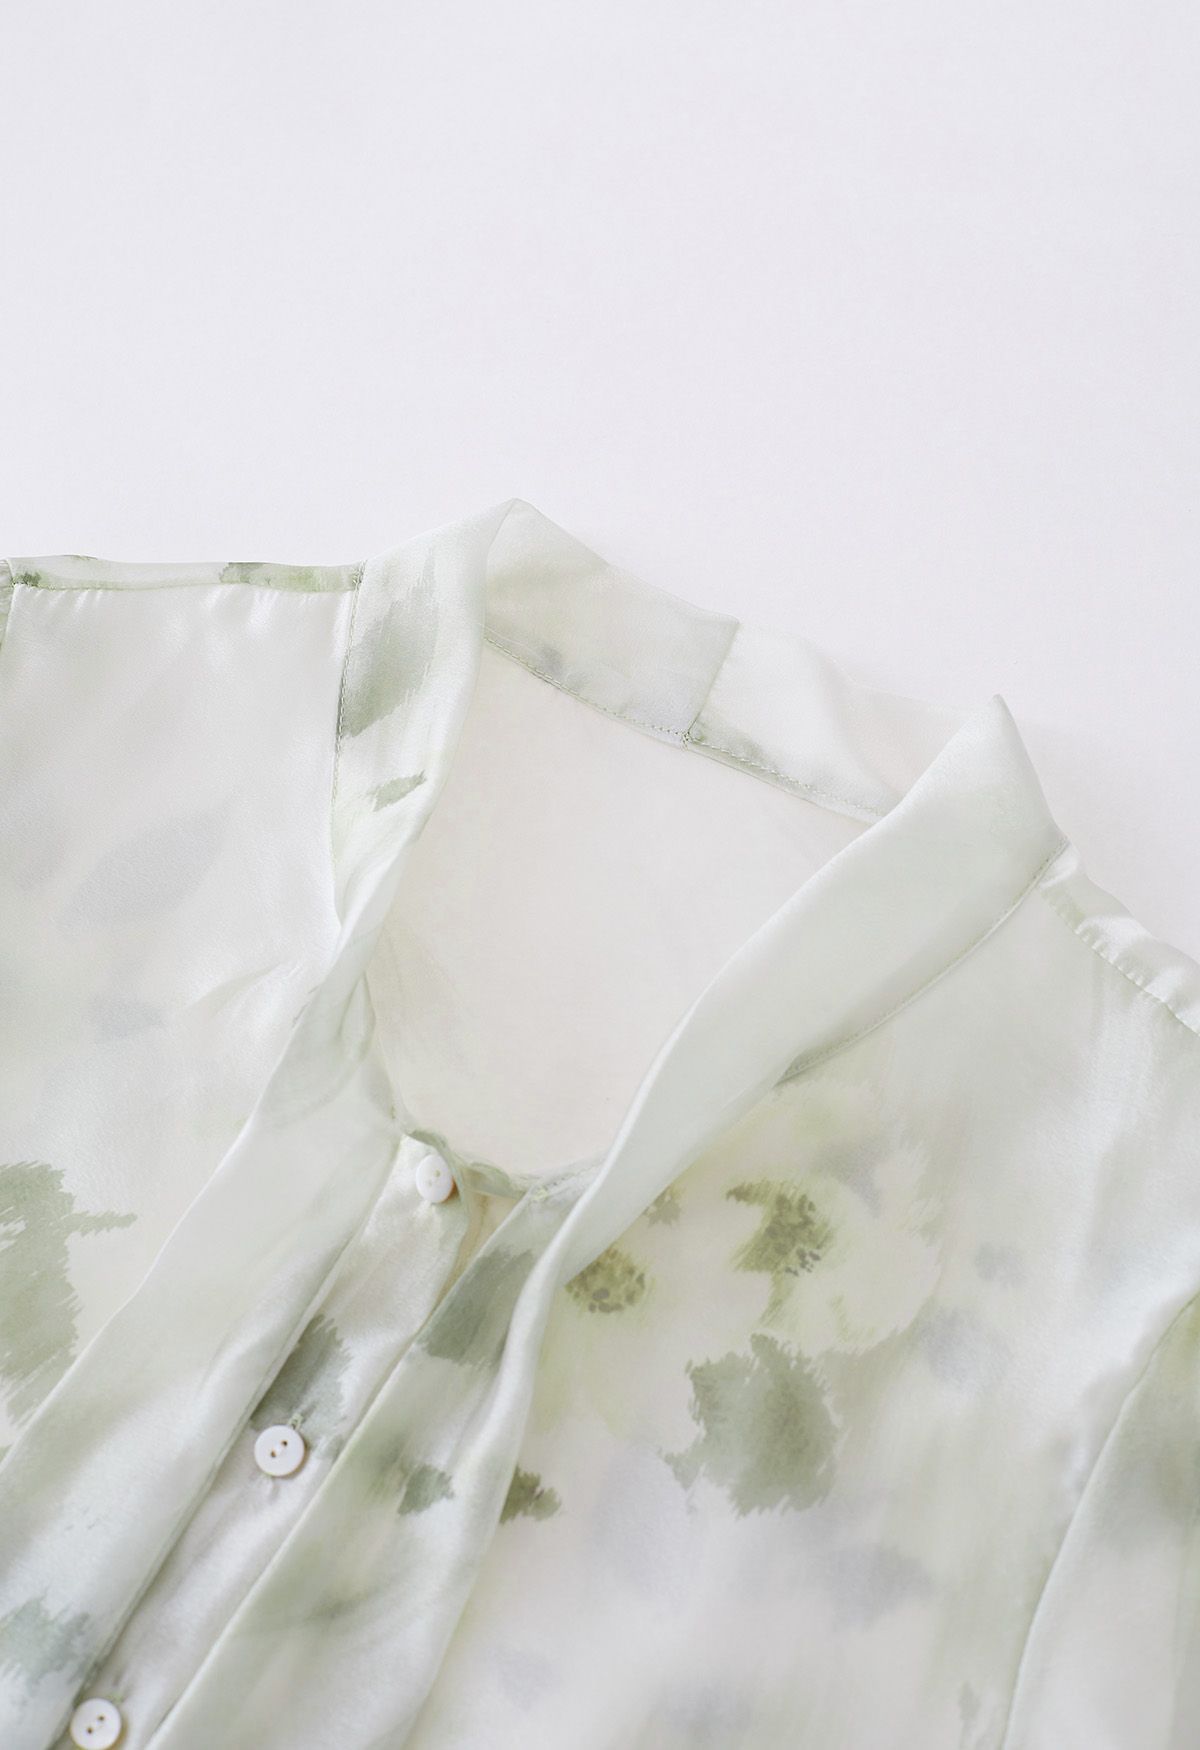 Watercolor Floral Bowknot Sheer Shirt in Green